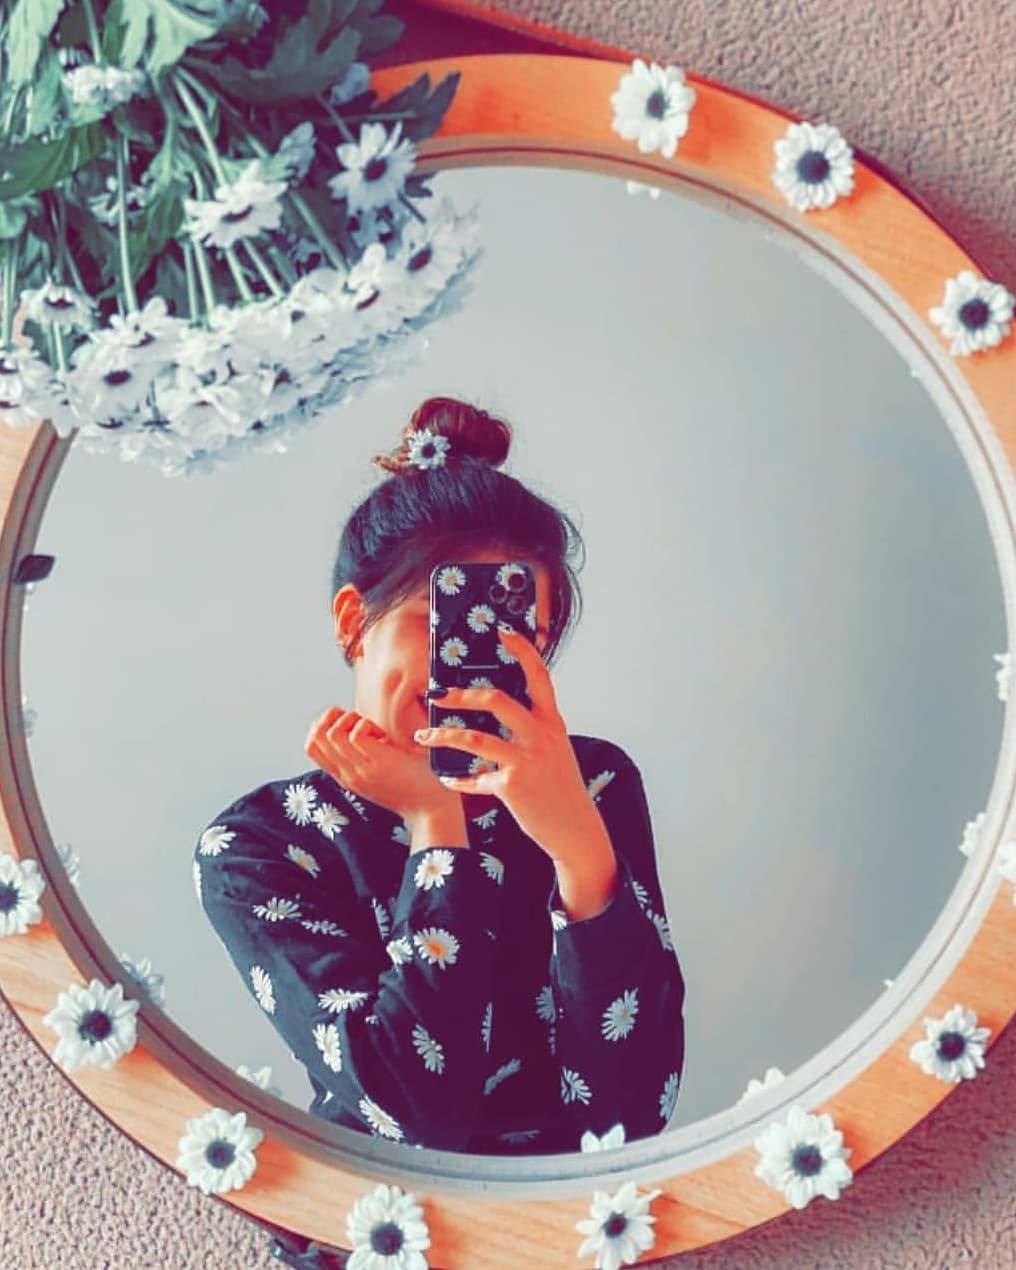 Girl mirror selfie Instagram profile picture